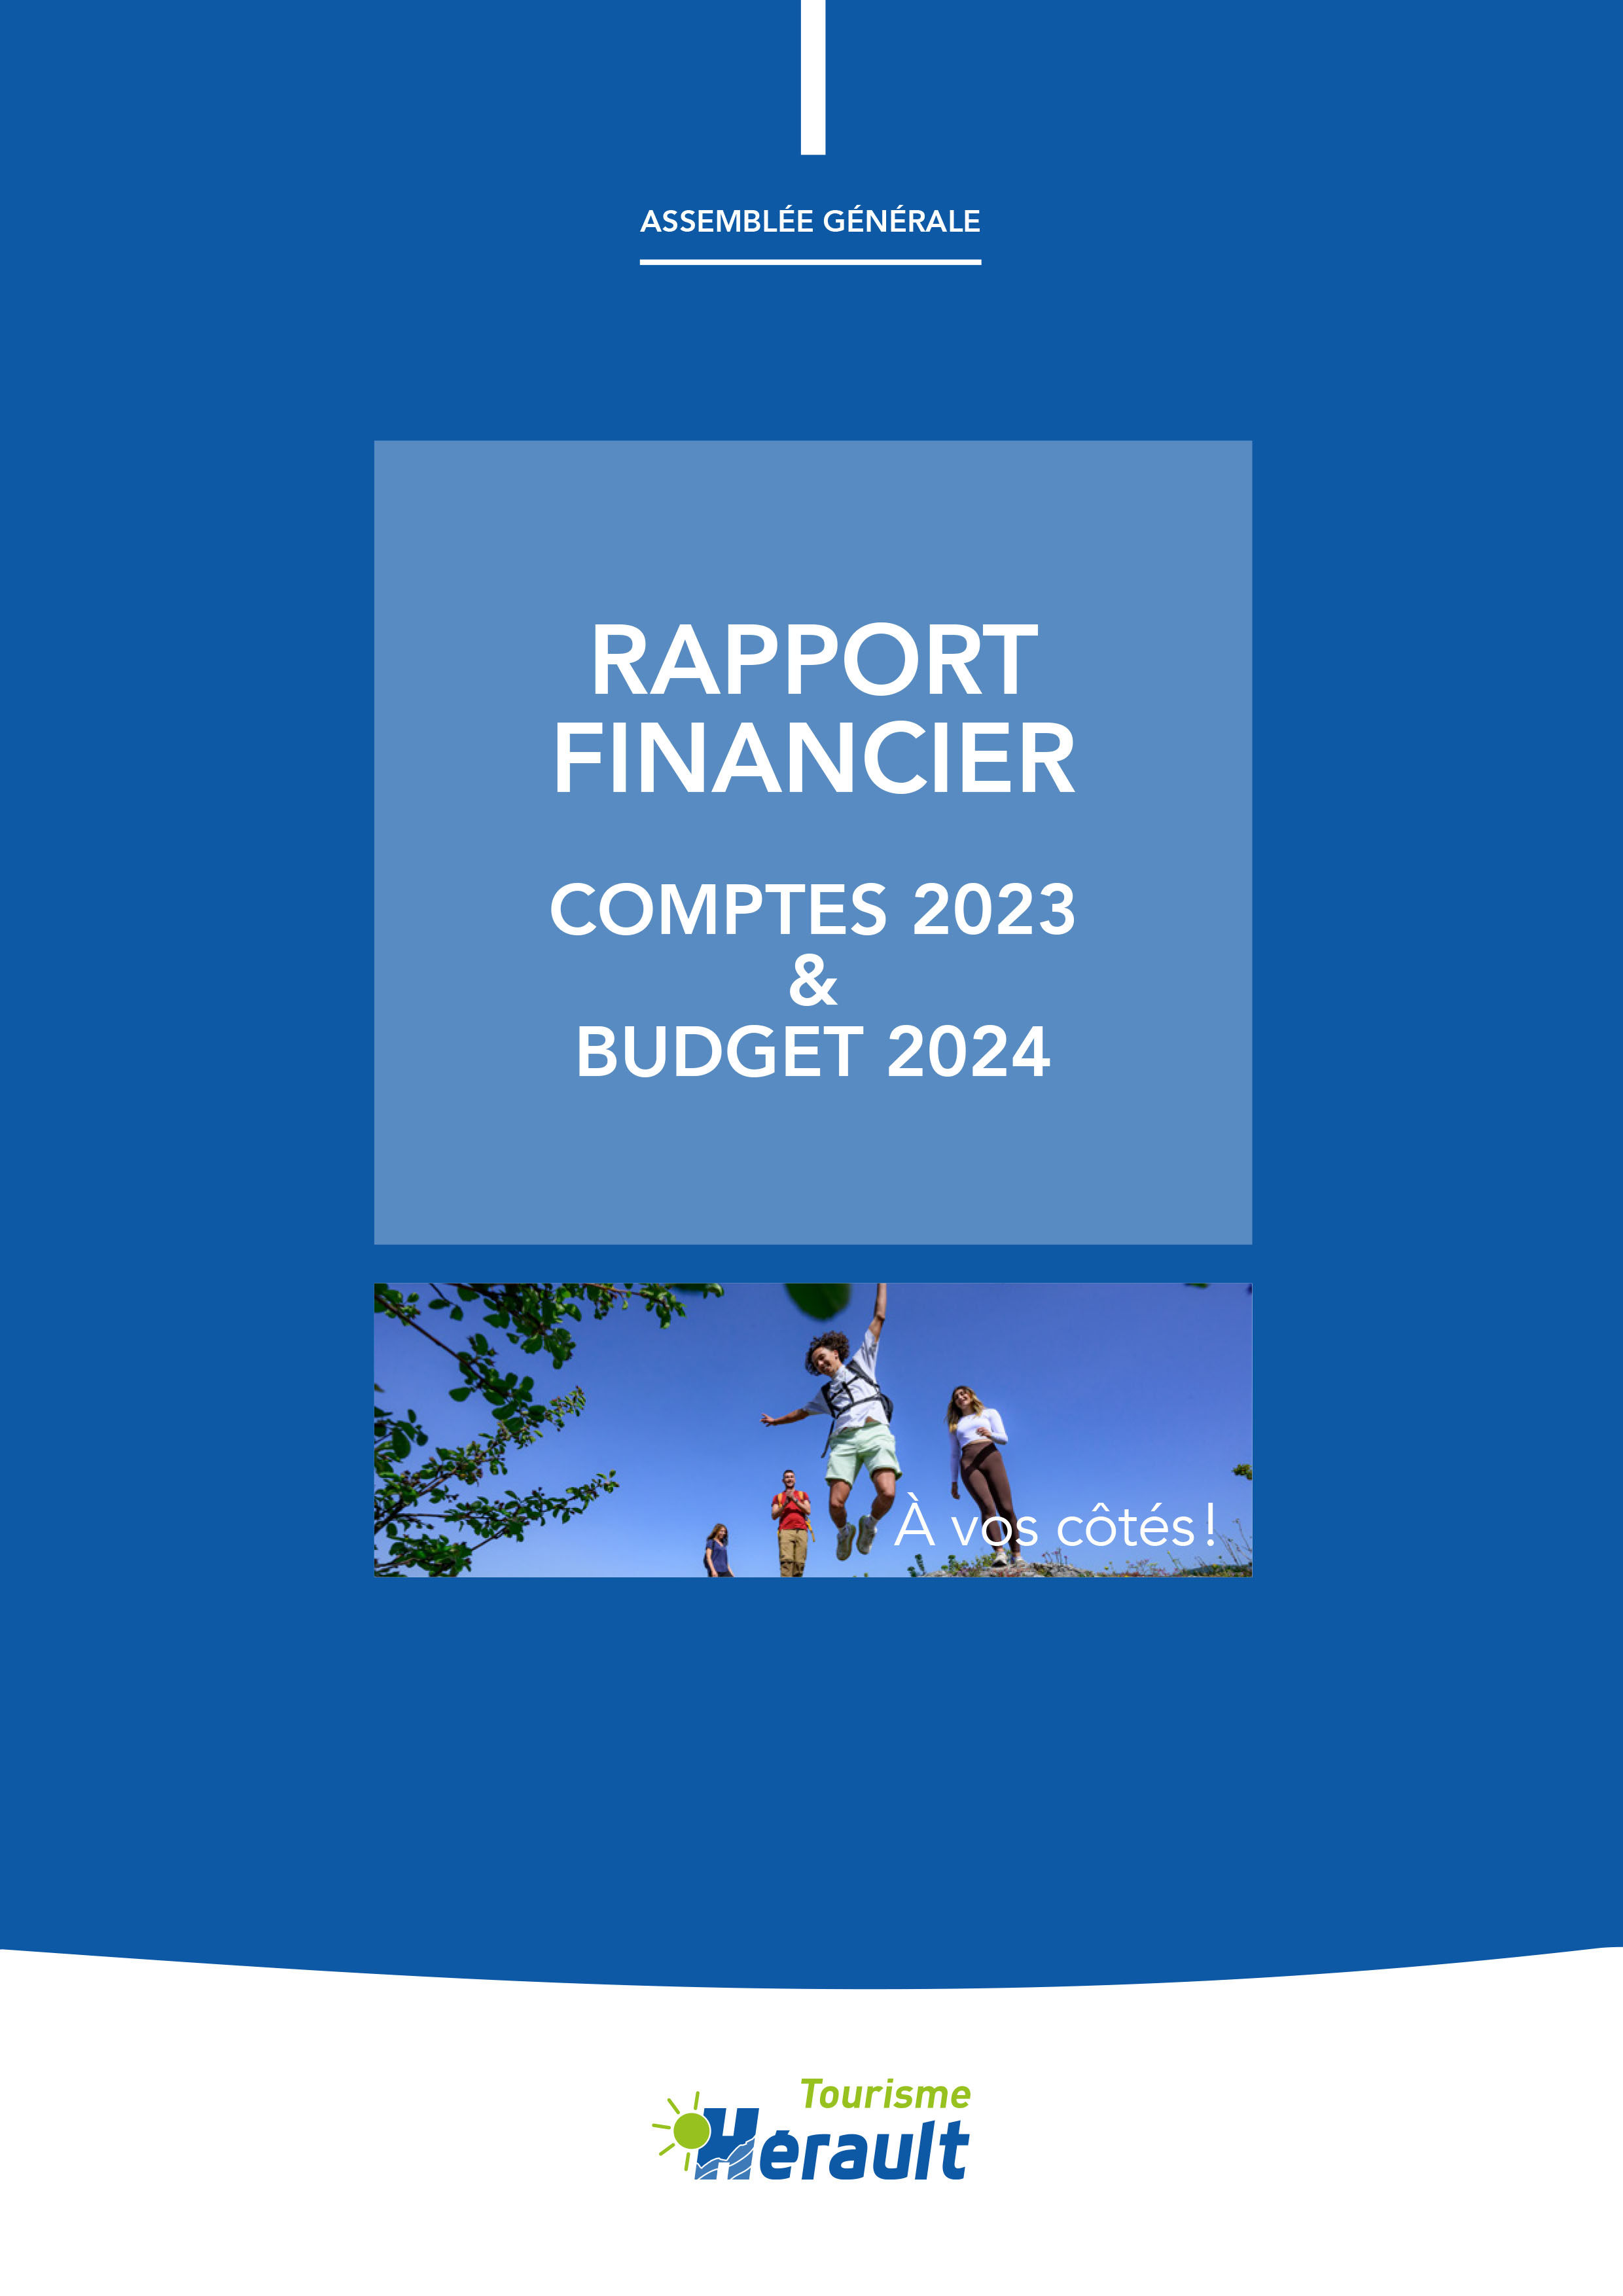 2023-Rapport-financier-image.jpg